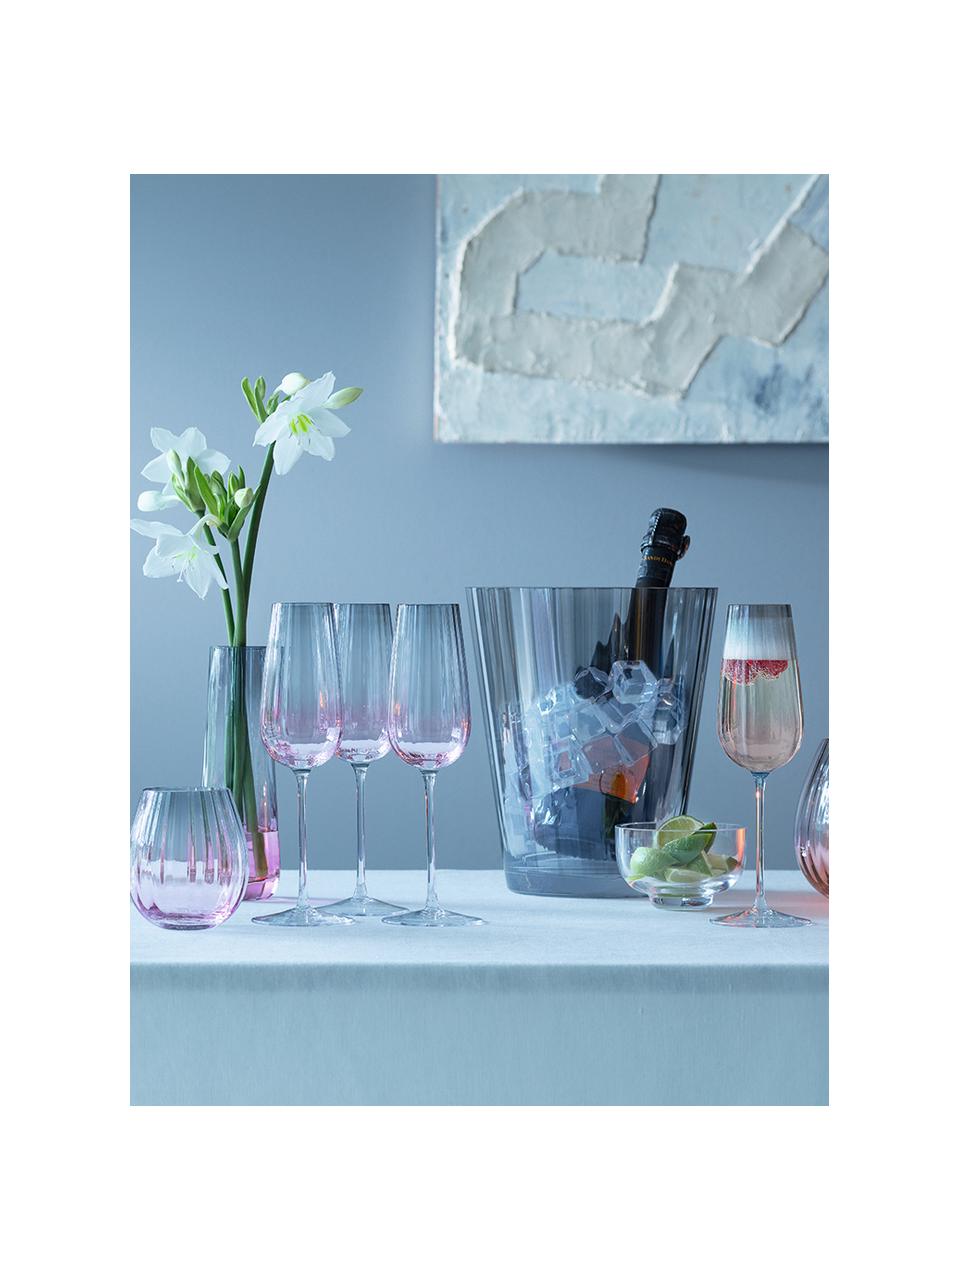 Handgemaakte champagneglazen Dusk, 2 stuks, Glas, Roze, grijs, Ø 6 x H 23 cm, 250 ml